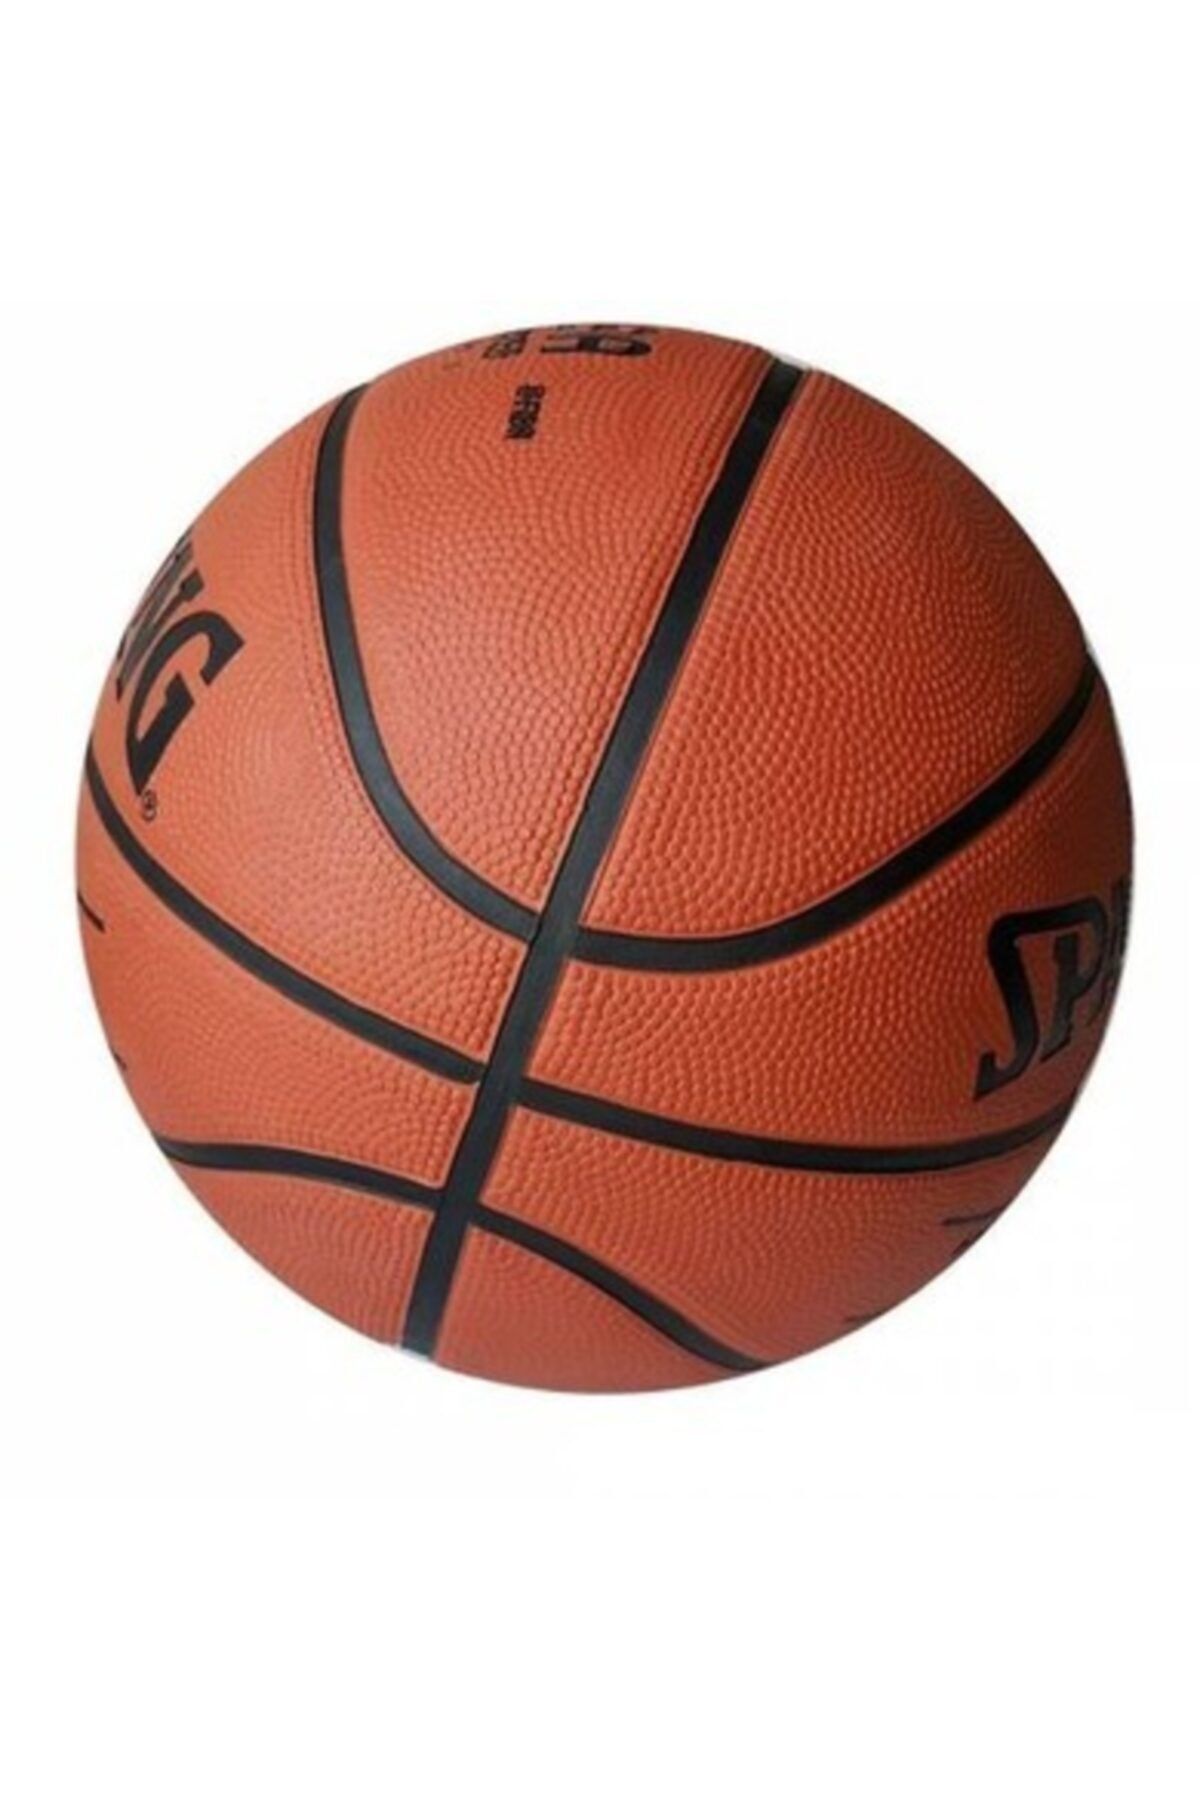 Spalding Tf-150 Basketbol Topu No 7